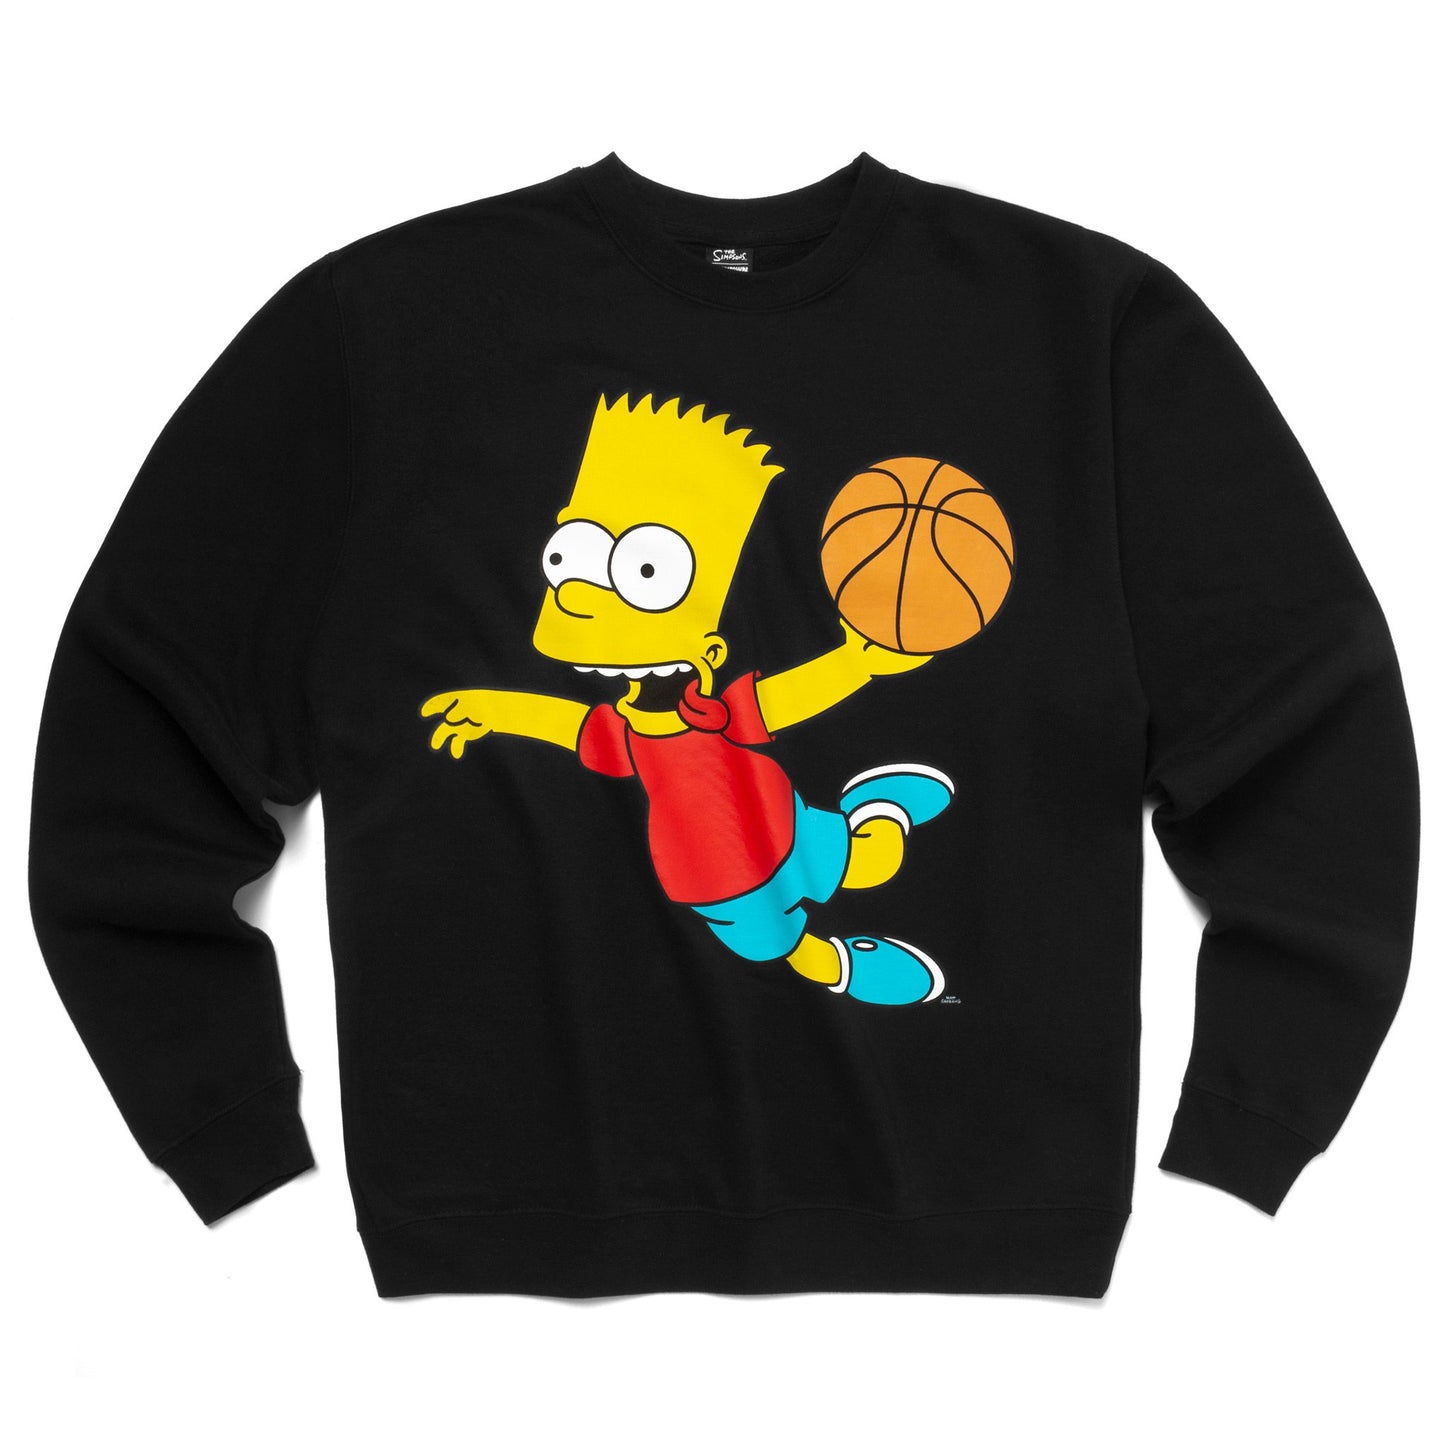 Chinatown Market x The Simpsons Air Bart Crew Sweatshirt